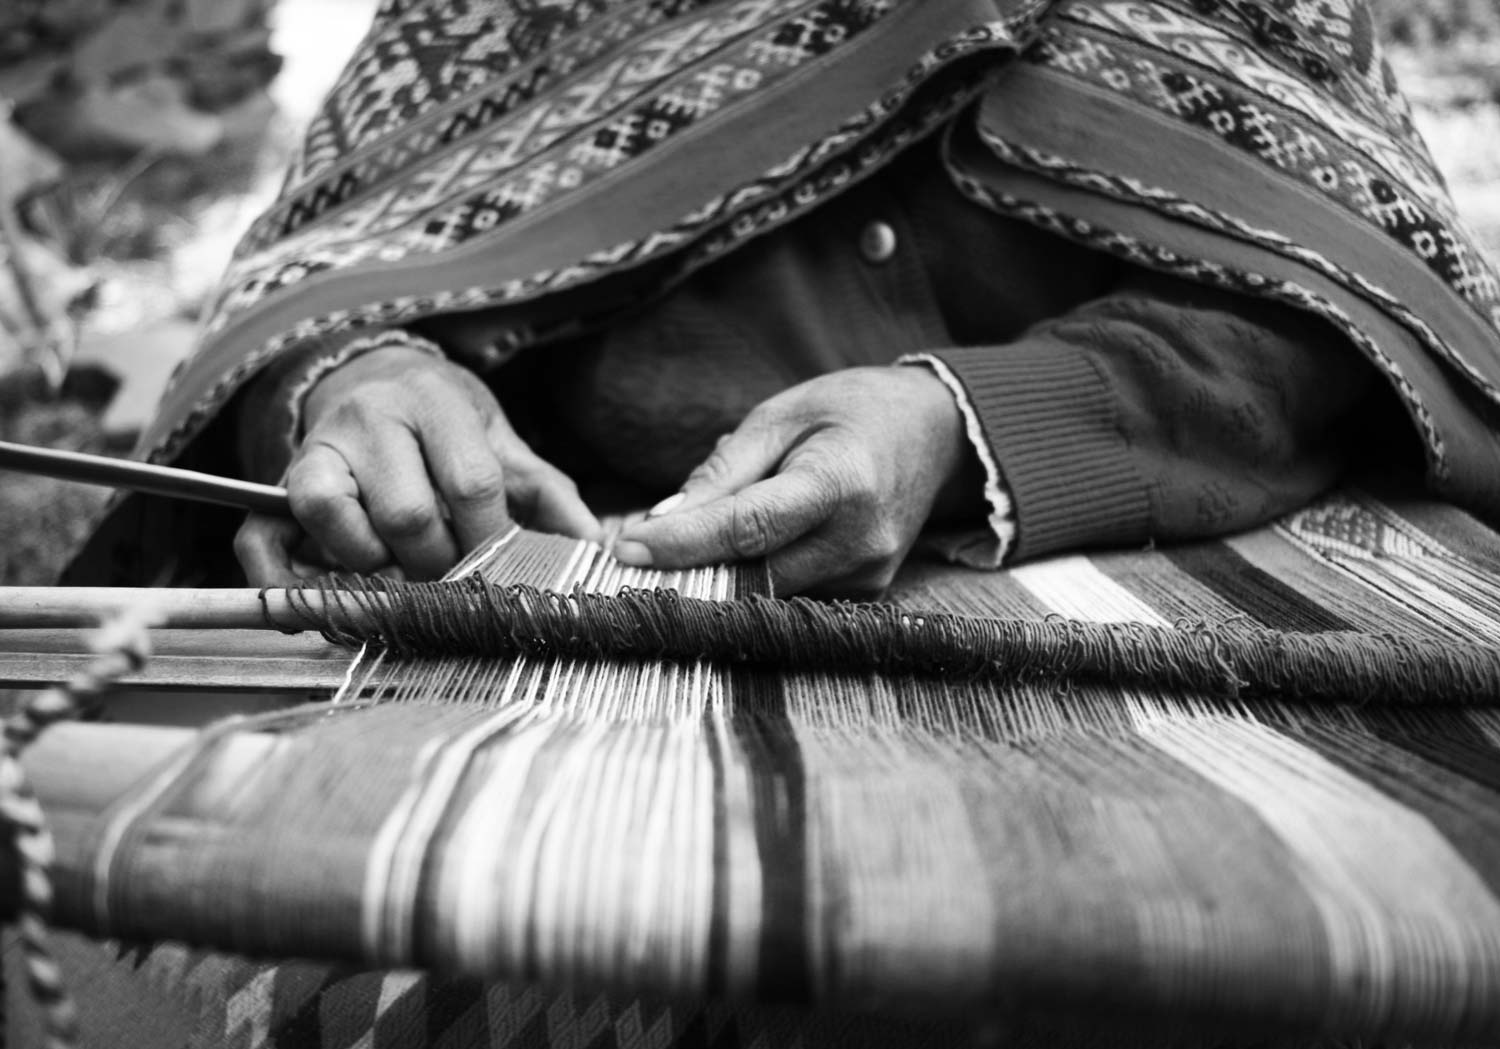 Lap Loom | Peru Fair Trade Clothing and Textile History